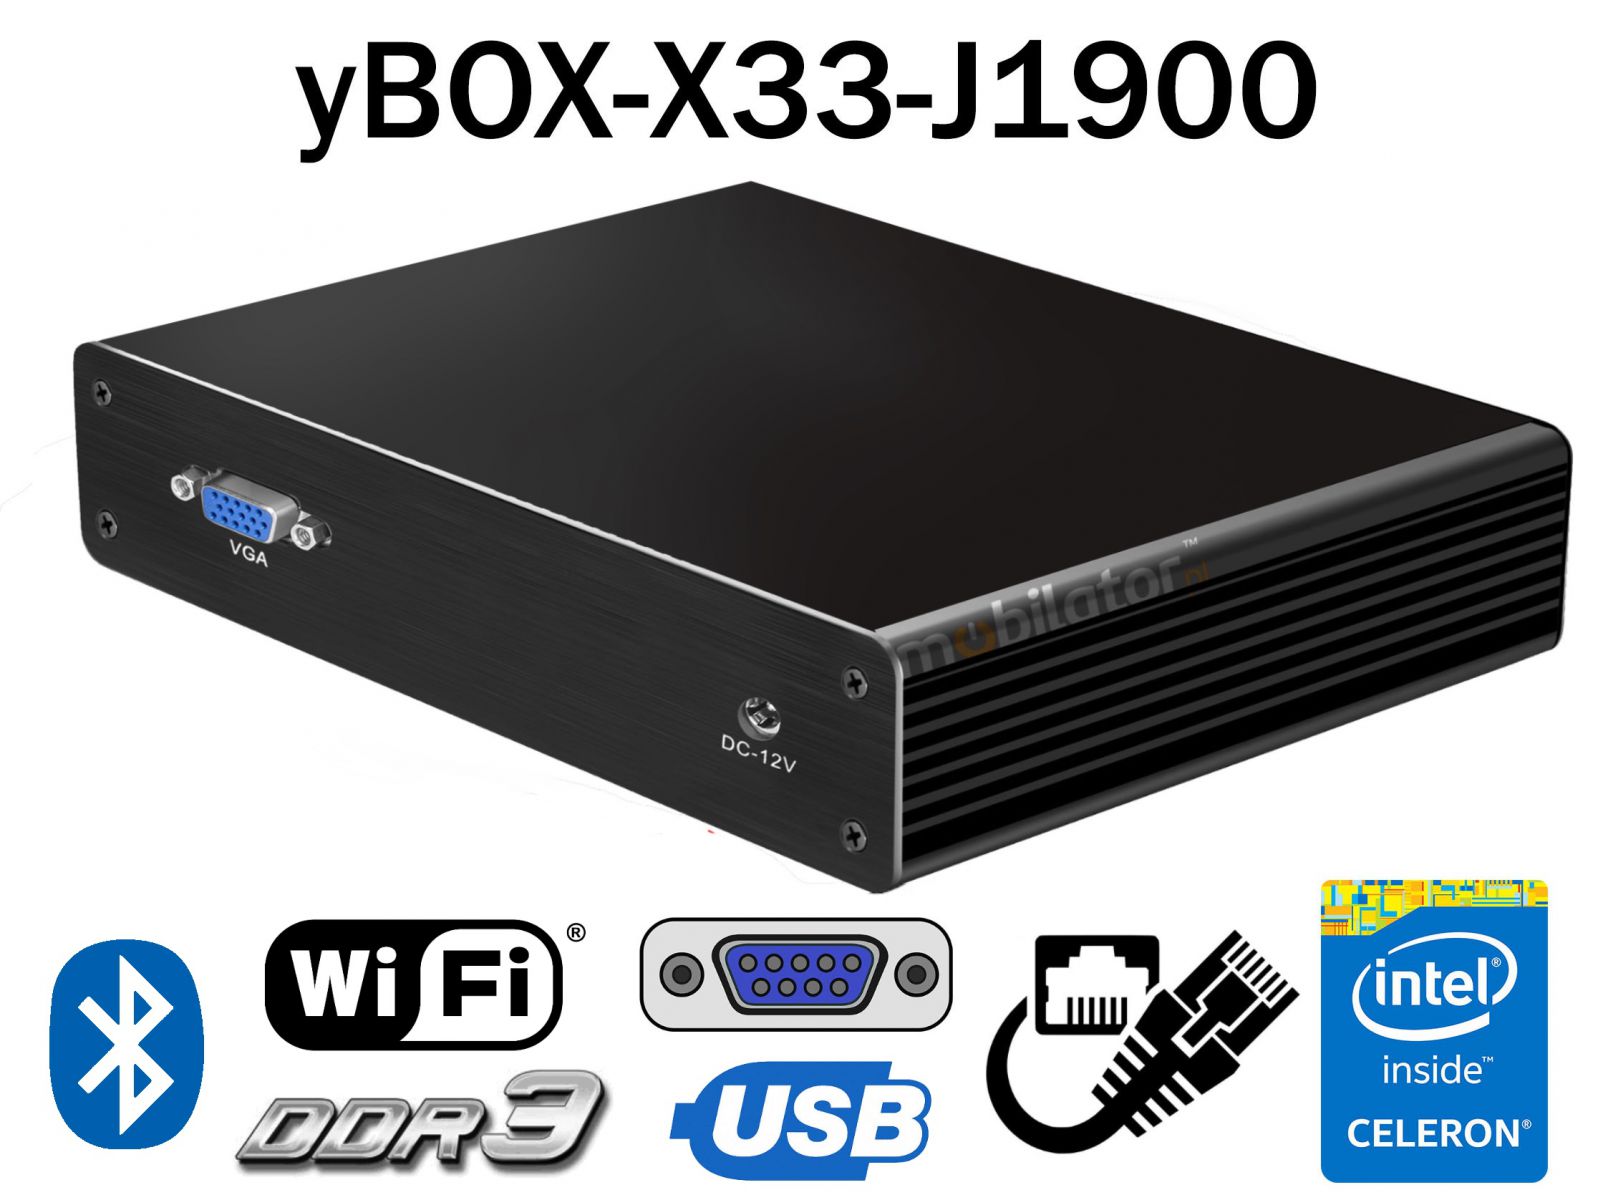 Small amplified 6xLAN PC, 4GB RAM, 128GB SSD, Industrial MiniPC for the office, yBOX-X33- (6xLAN) -J1900 v. 2